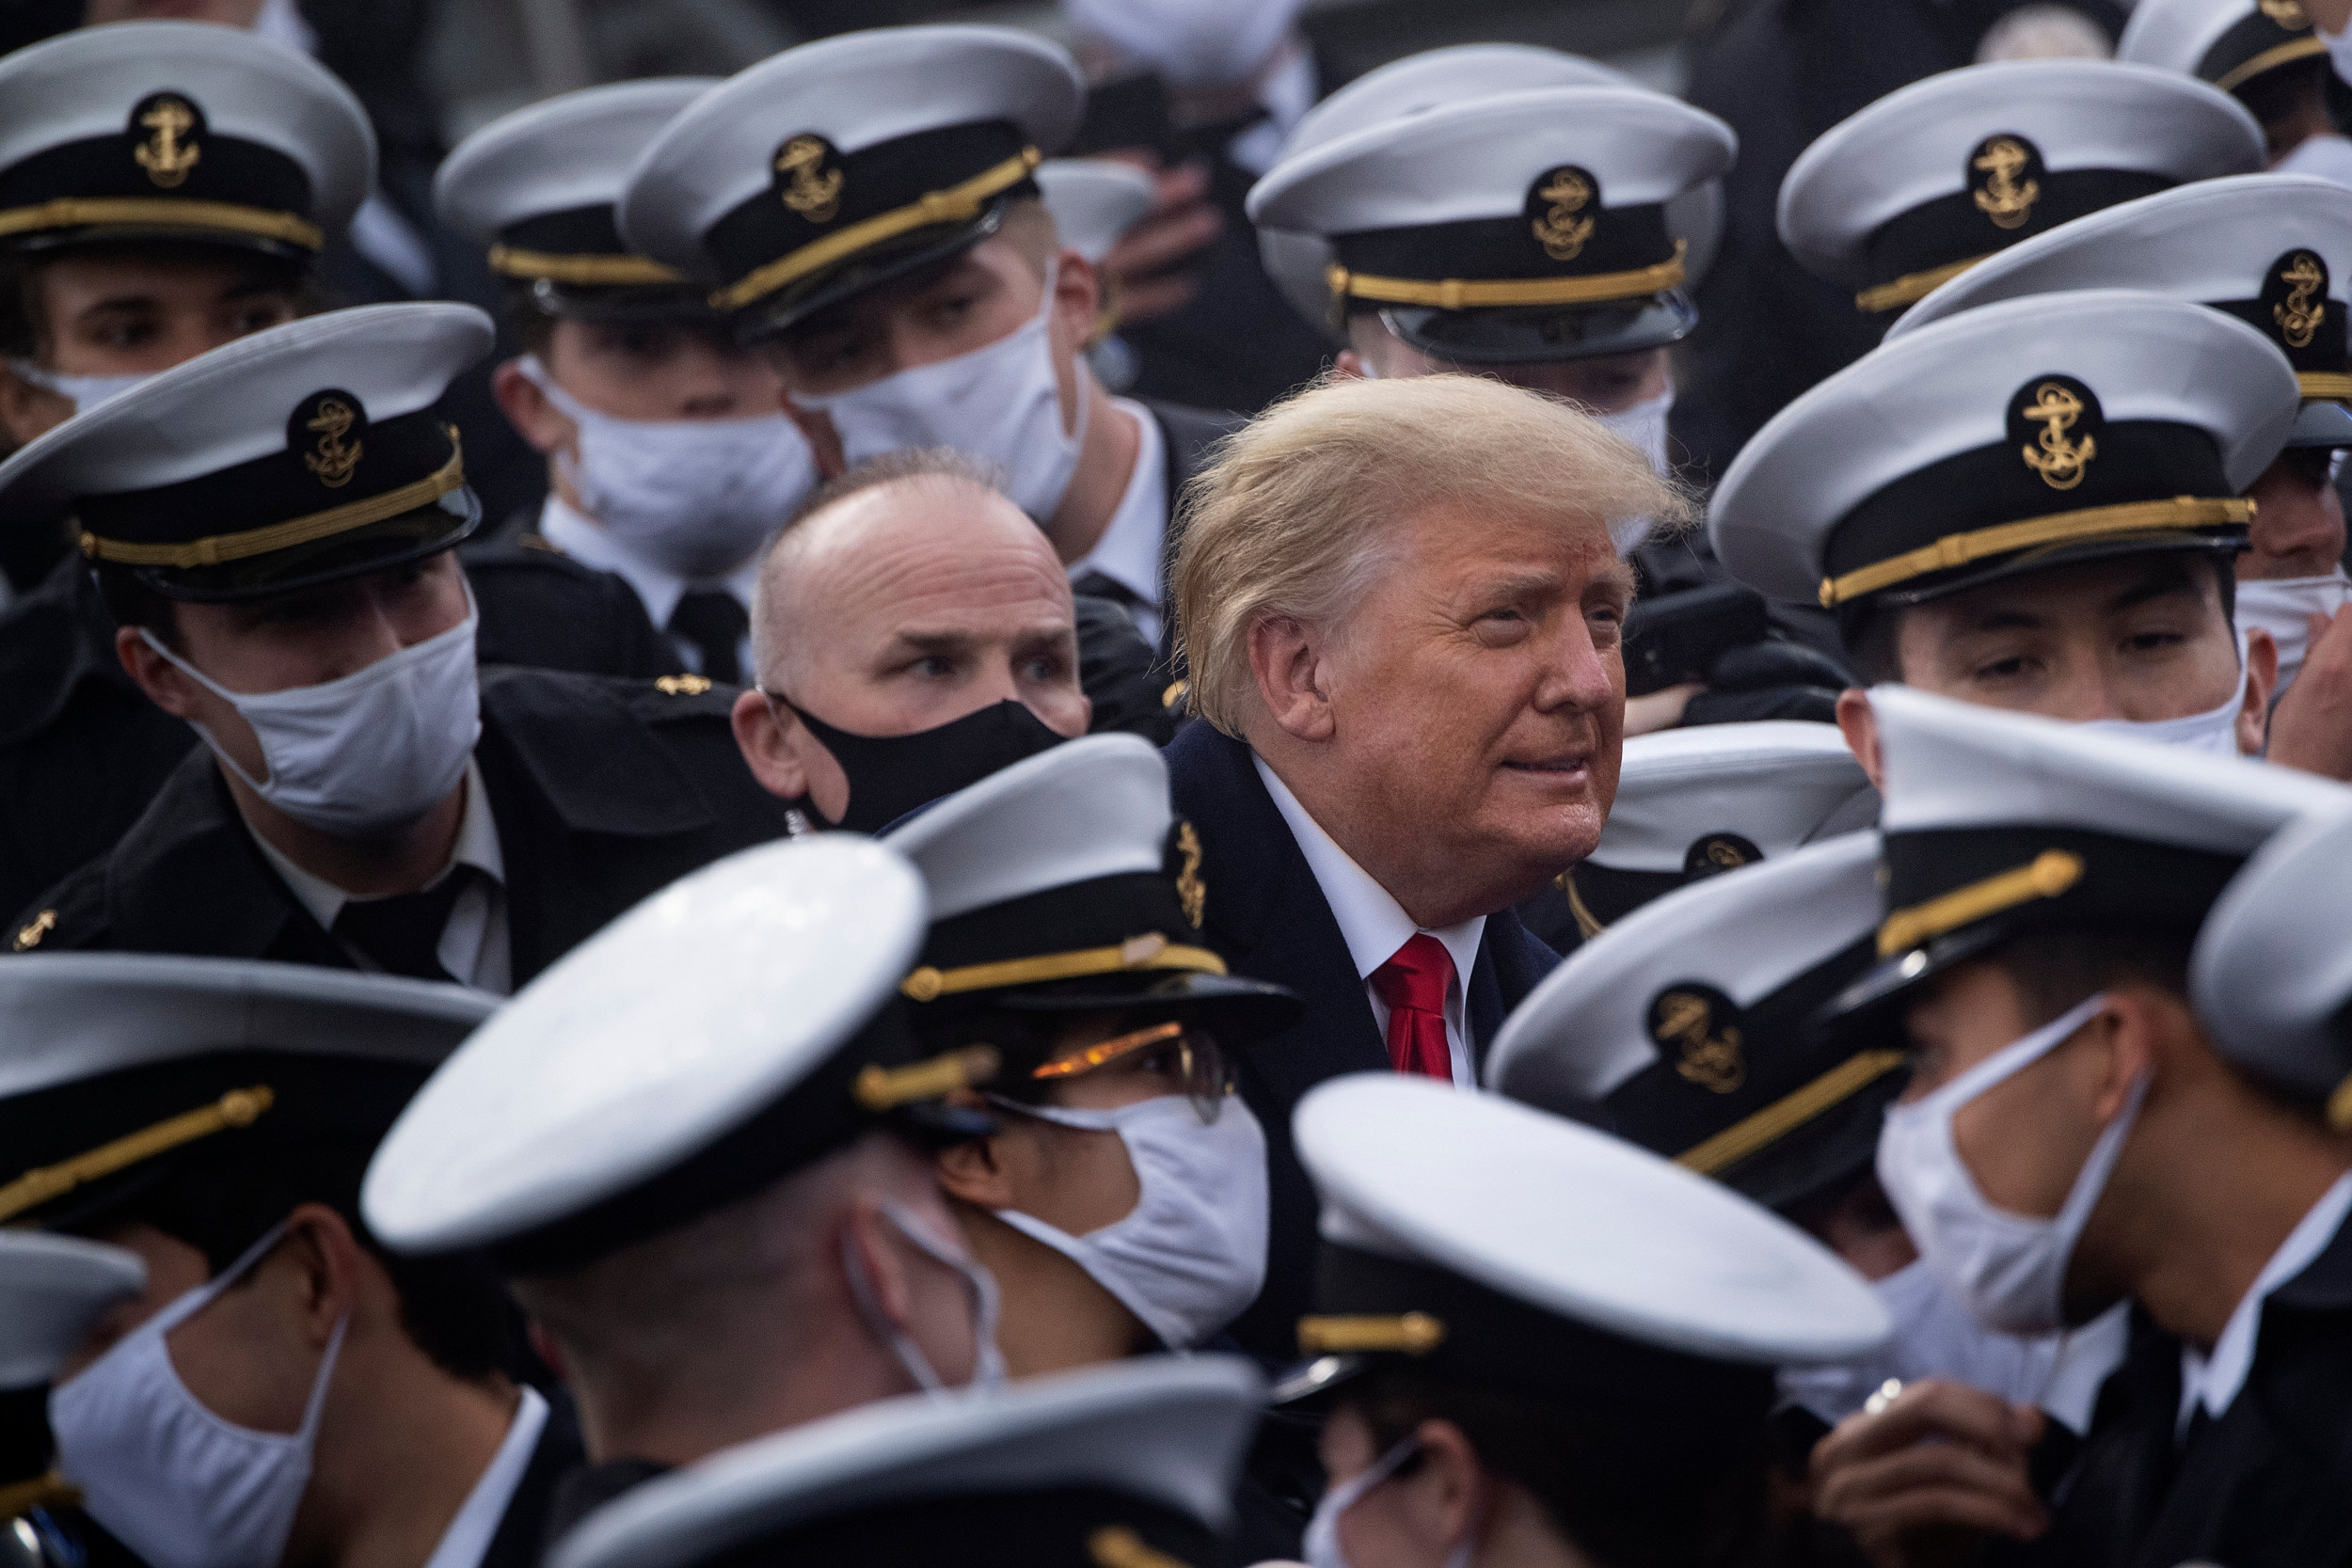 Donald Trump 2020 election protest West Point